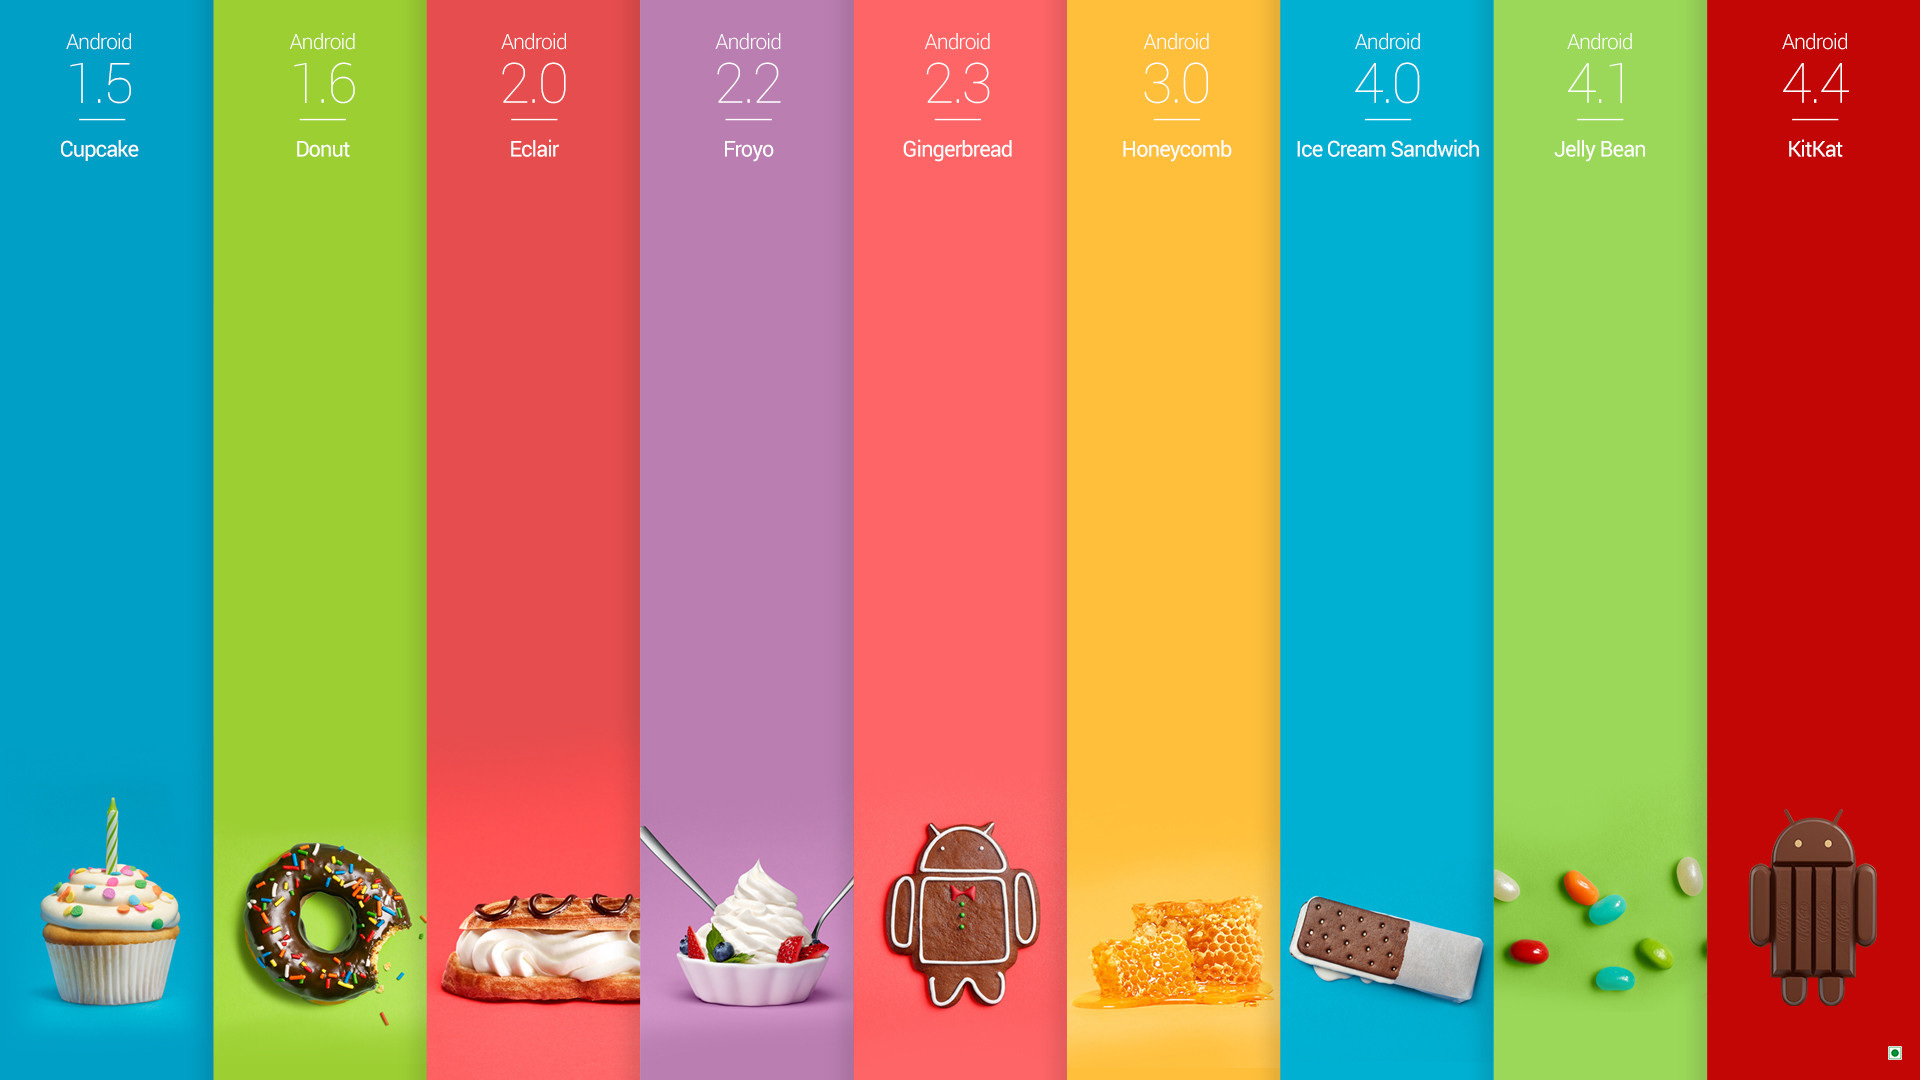 1920x1080 Android Kitkat Robot HD Wallpaper Desktop 6684 Wallpaper 